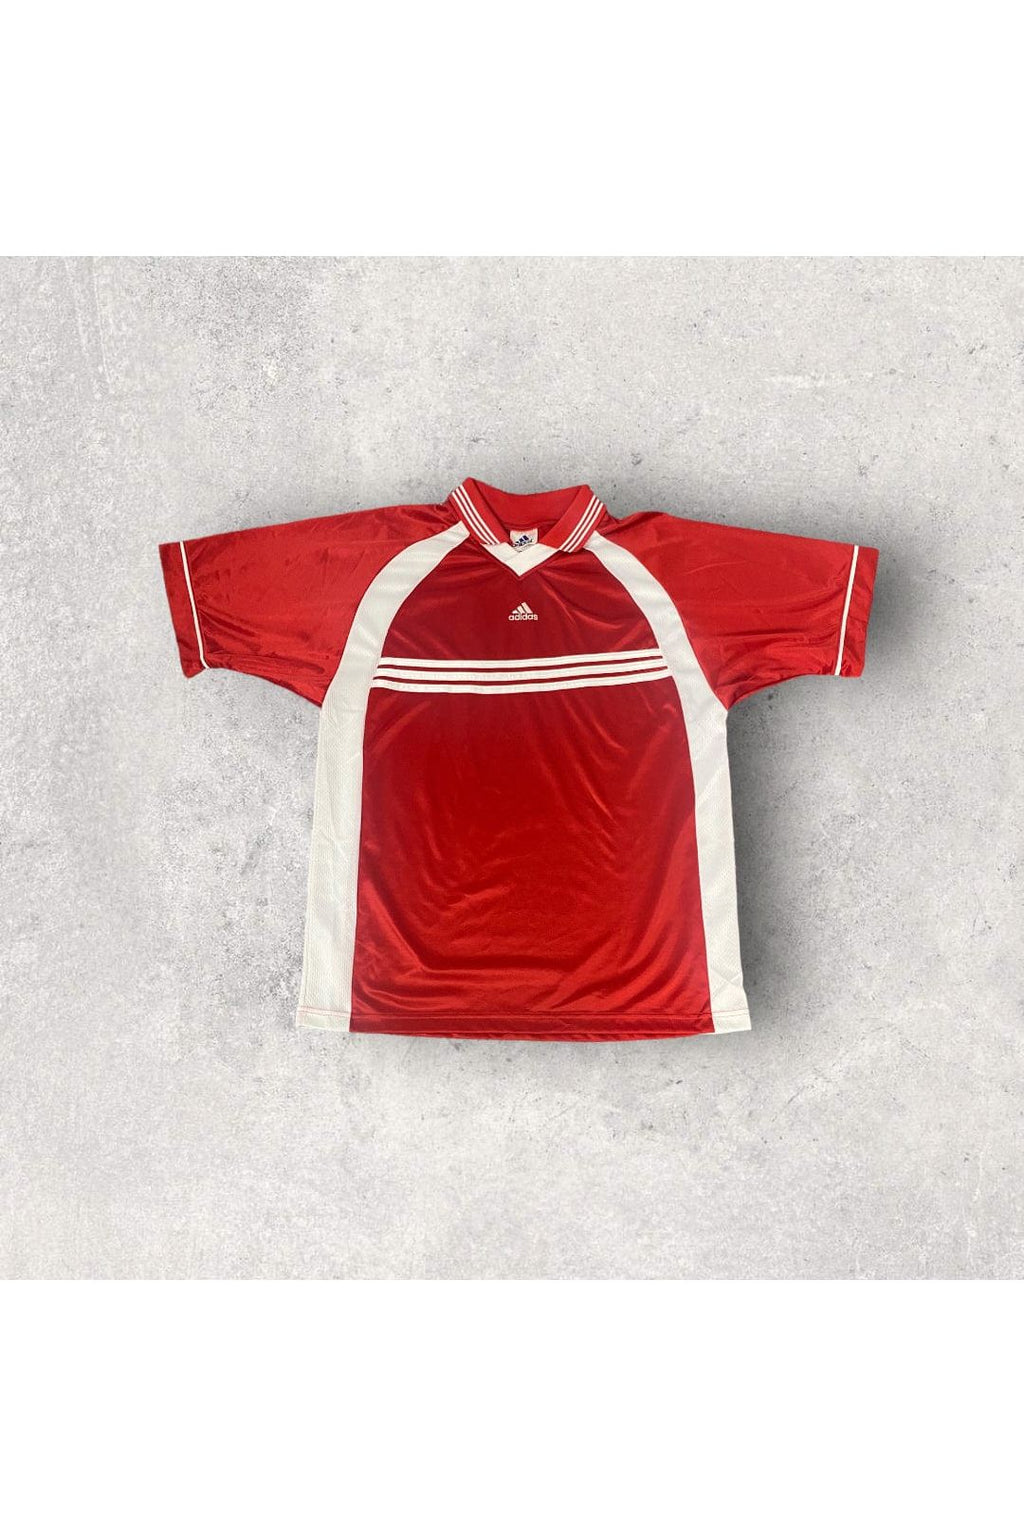 Vintage Adidas Soccer Jersey- L